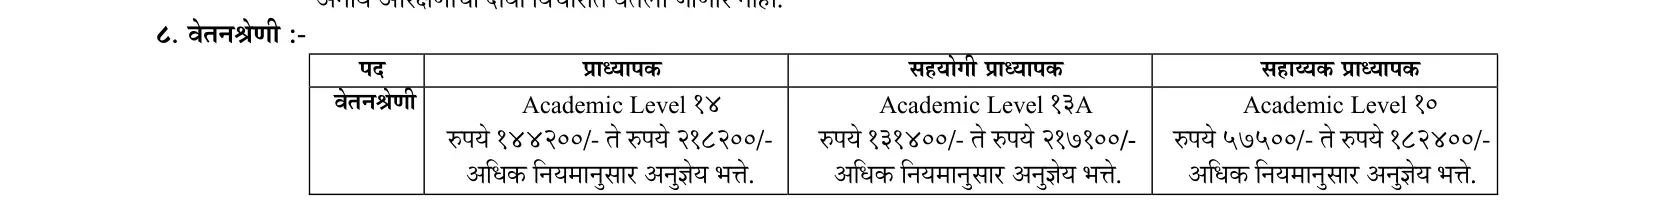 Government ayurvedic college recruitment